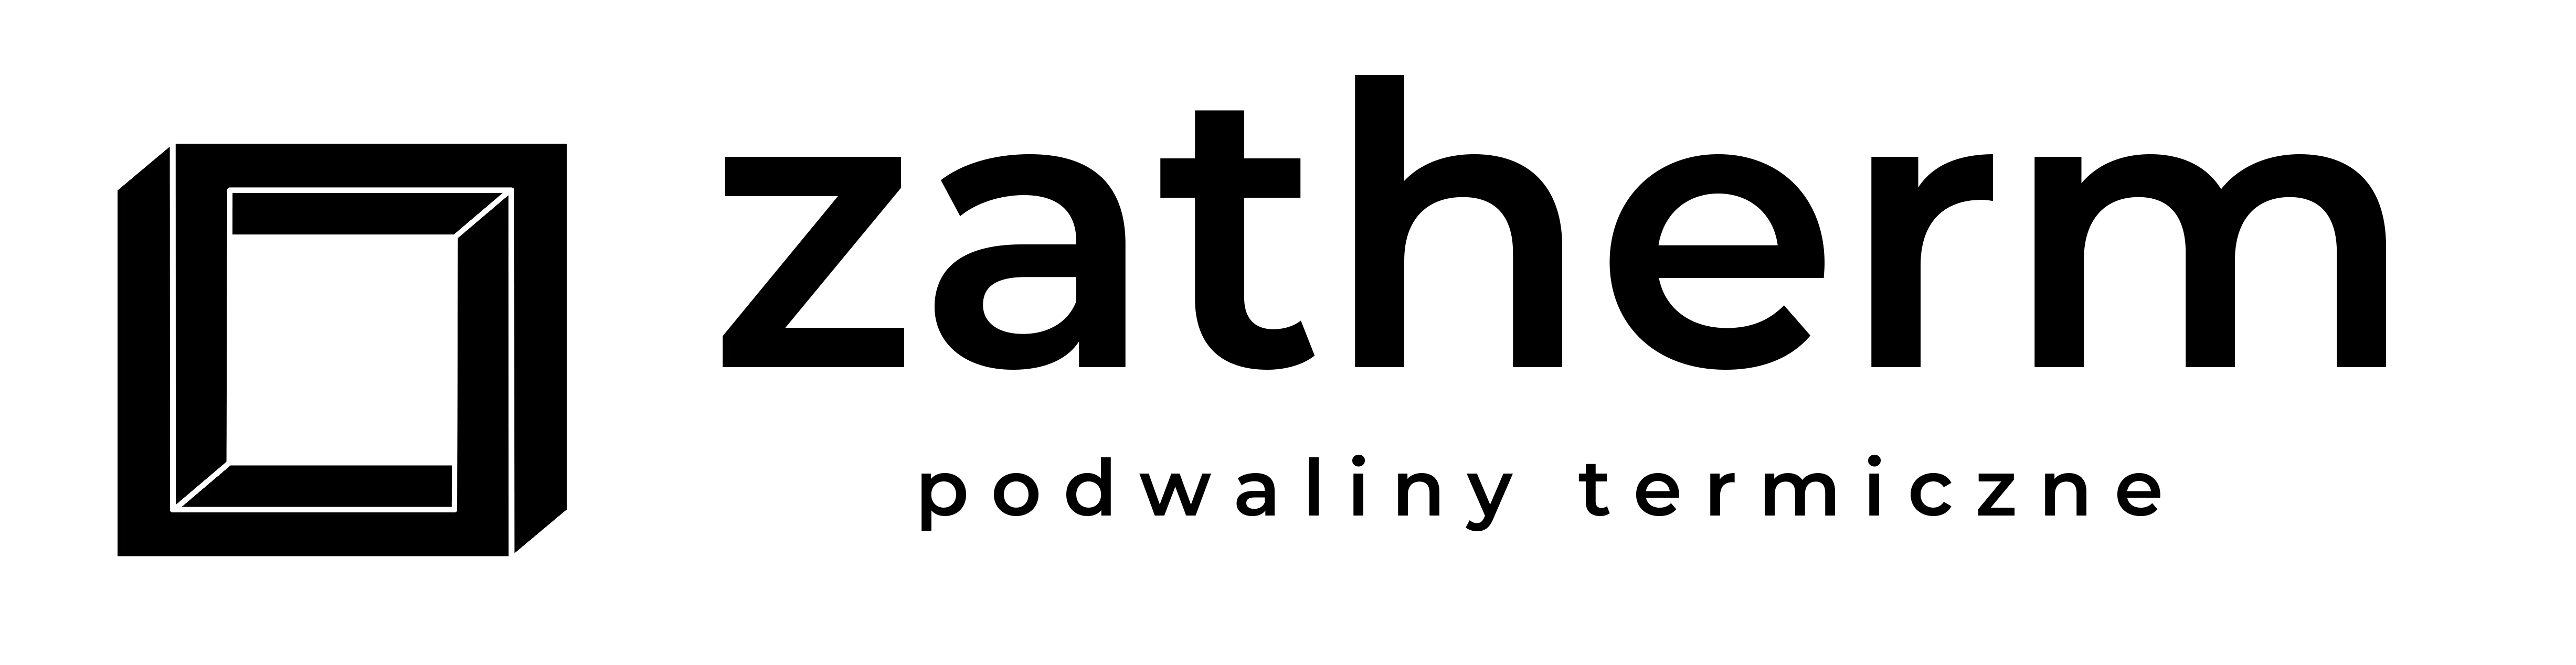 Zatherm logo